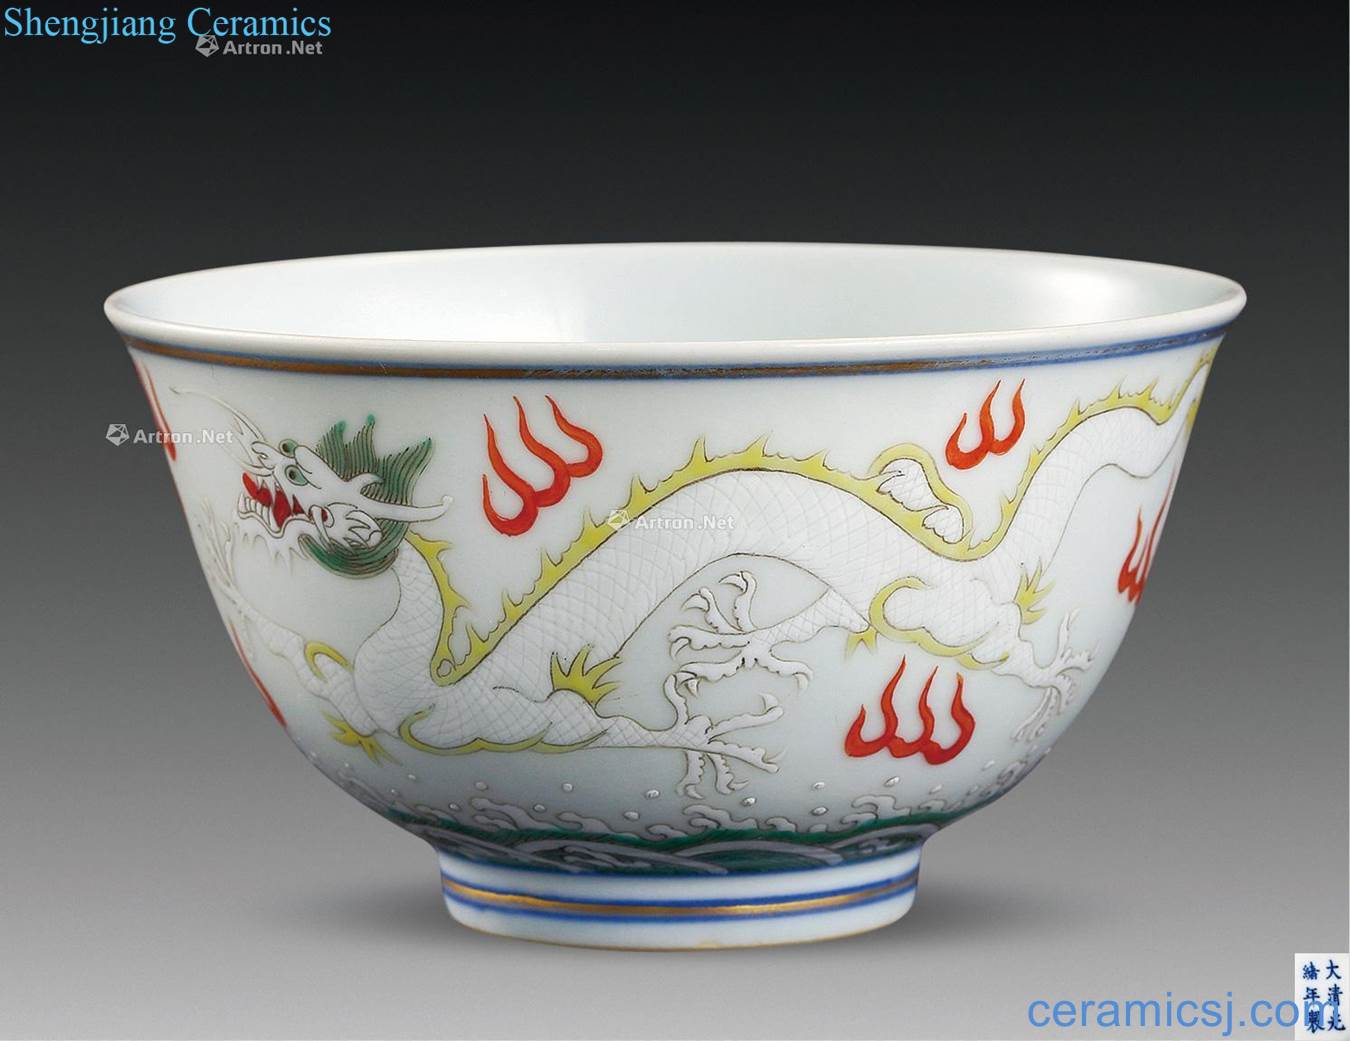 Pastel reign of qing emperor guangxu dragon bowls